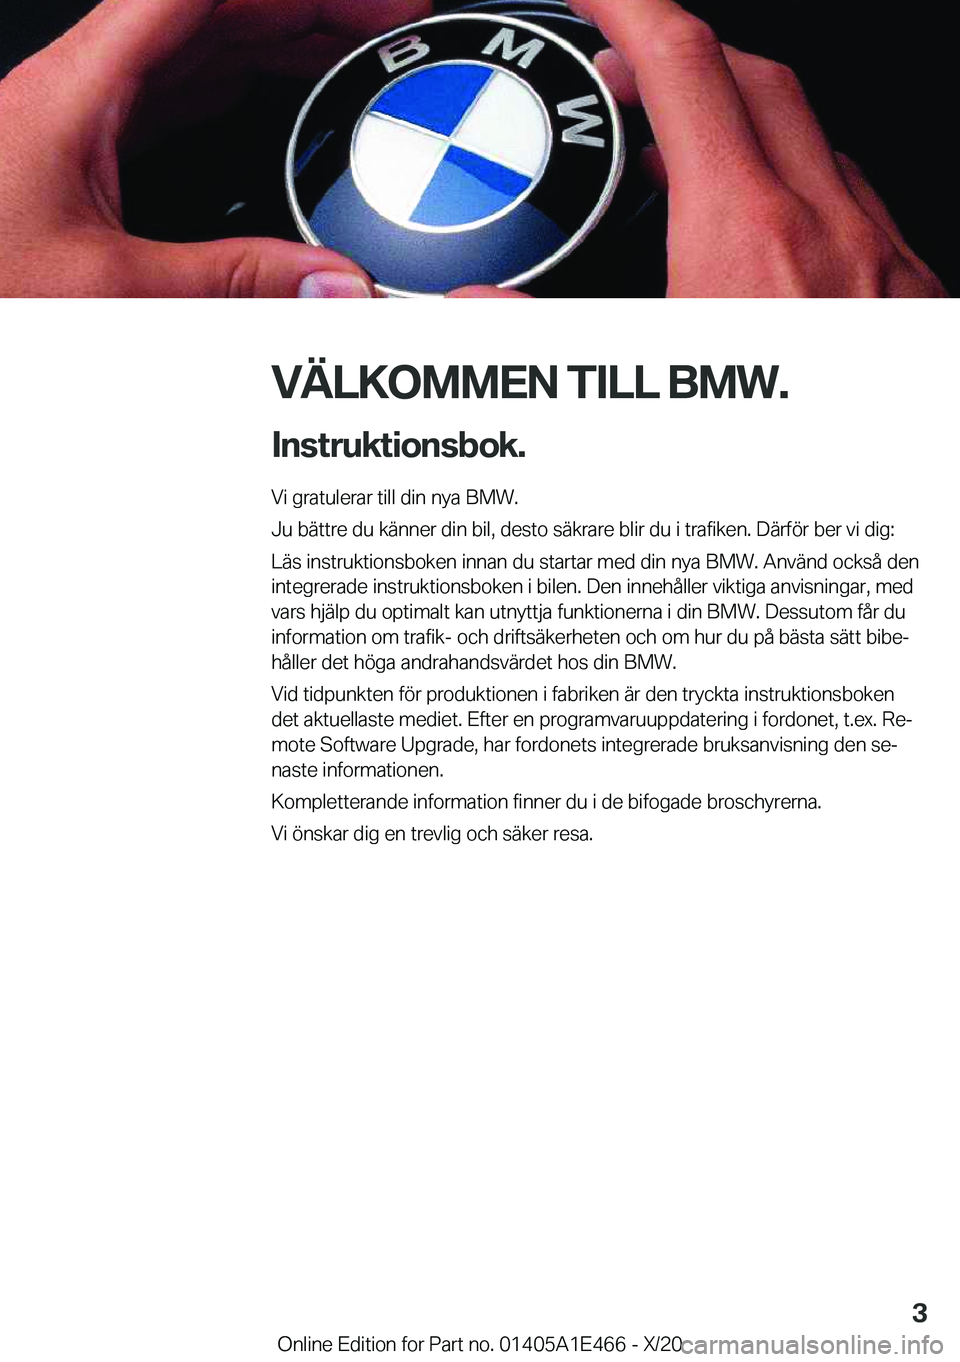 BMW M3 2021  InstruktionsbÖcker (in Swedish) �V�Ä�L�K�O�M�M�E�N��T�I�L�L��B�M�W�.�I�n�s�t�r�u�k�t�i�o�n�s�b�o�k�.
�V�i��g�r�a�t�u�l�e�r�a�r��t�i�l�l��d�i�n��n�y�a��B�M�W�.
�J�u��b�ä�t�t�r�e��d�u��k�ä�n�n�e�r��d�i�n��b�i�l�,��d�e�